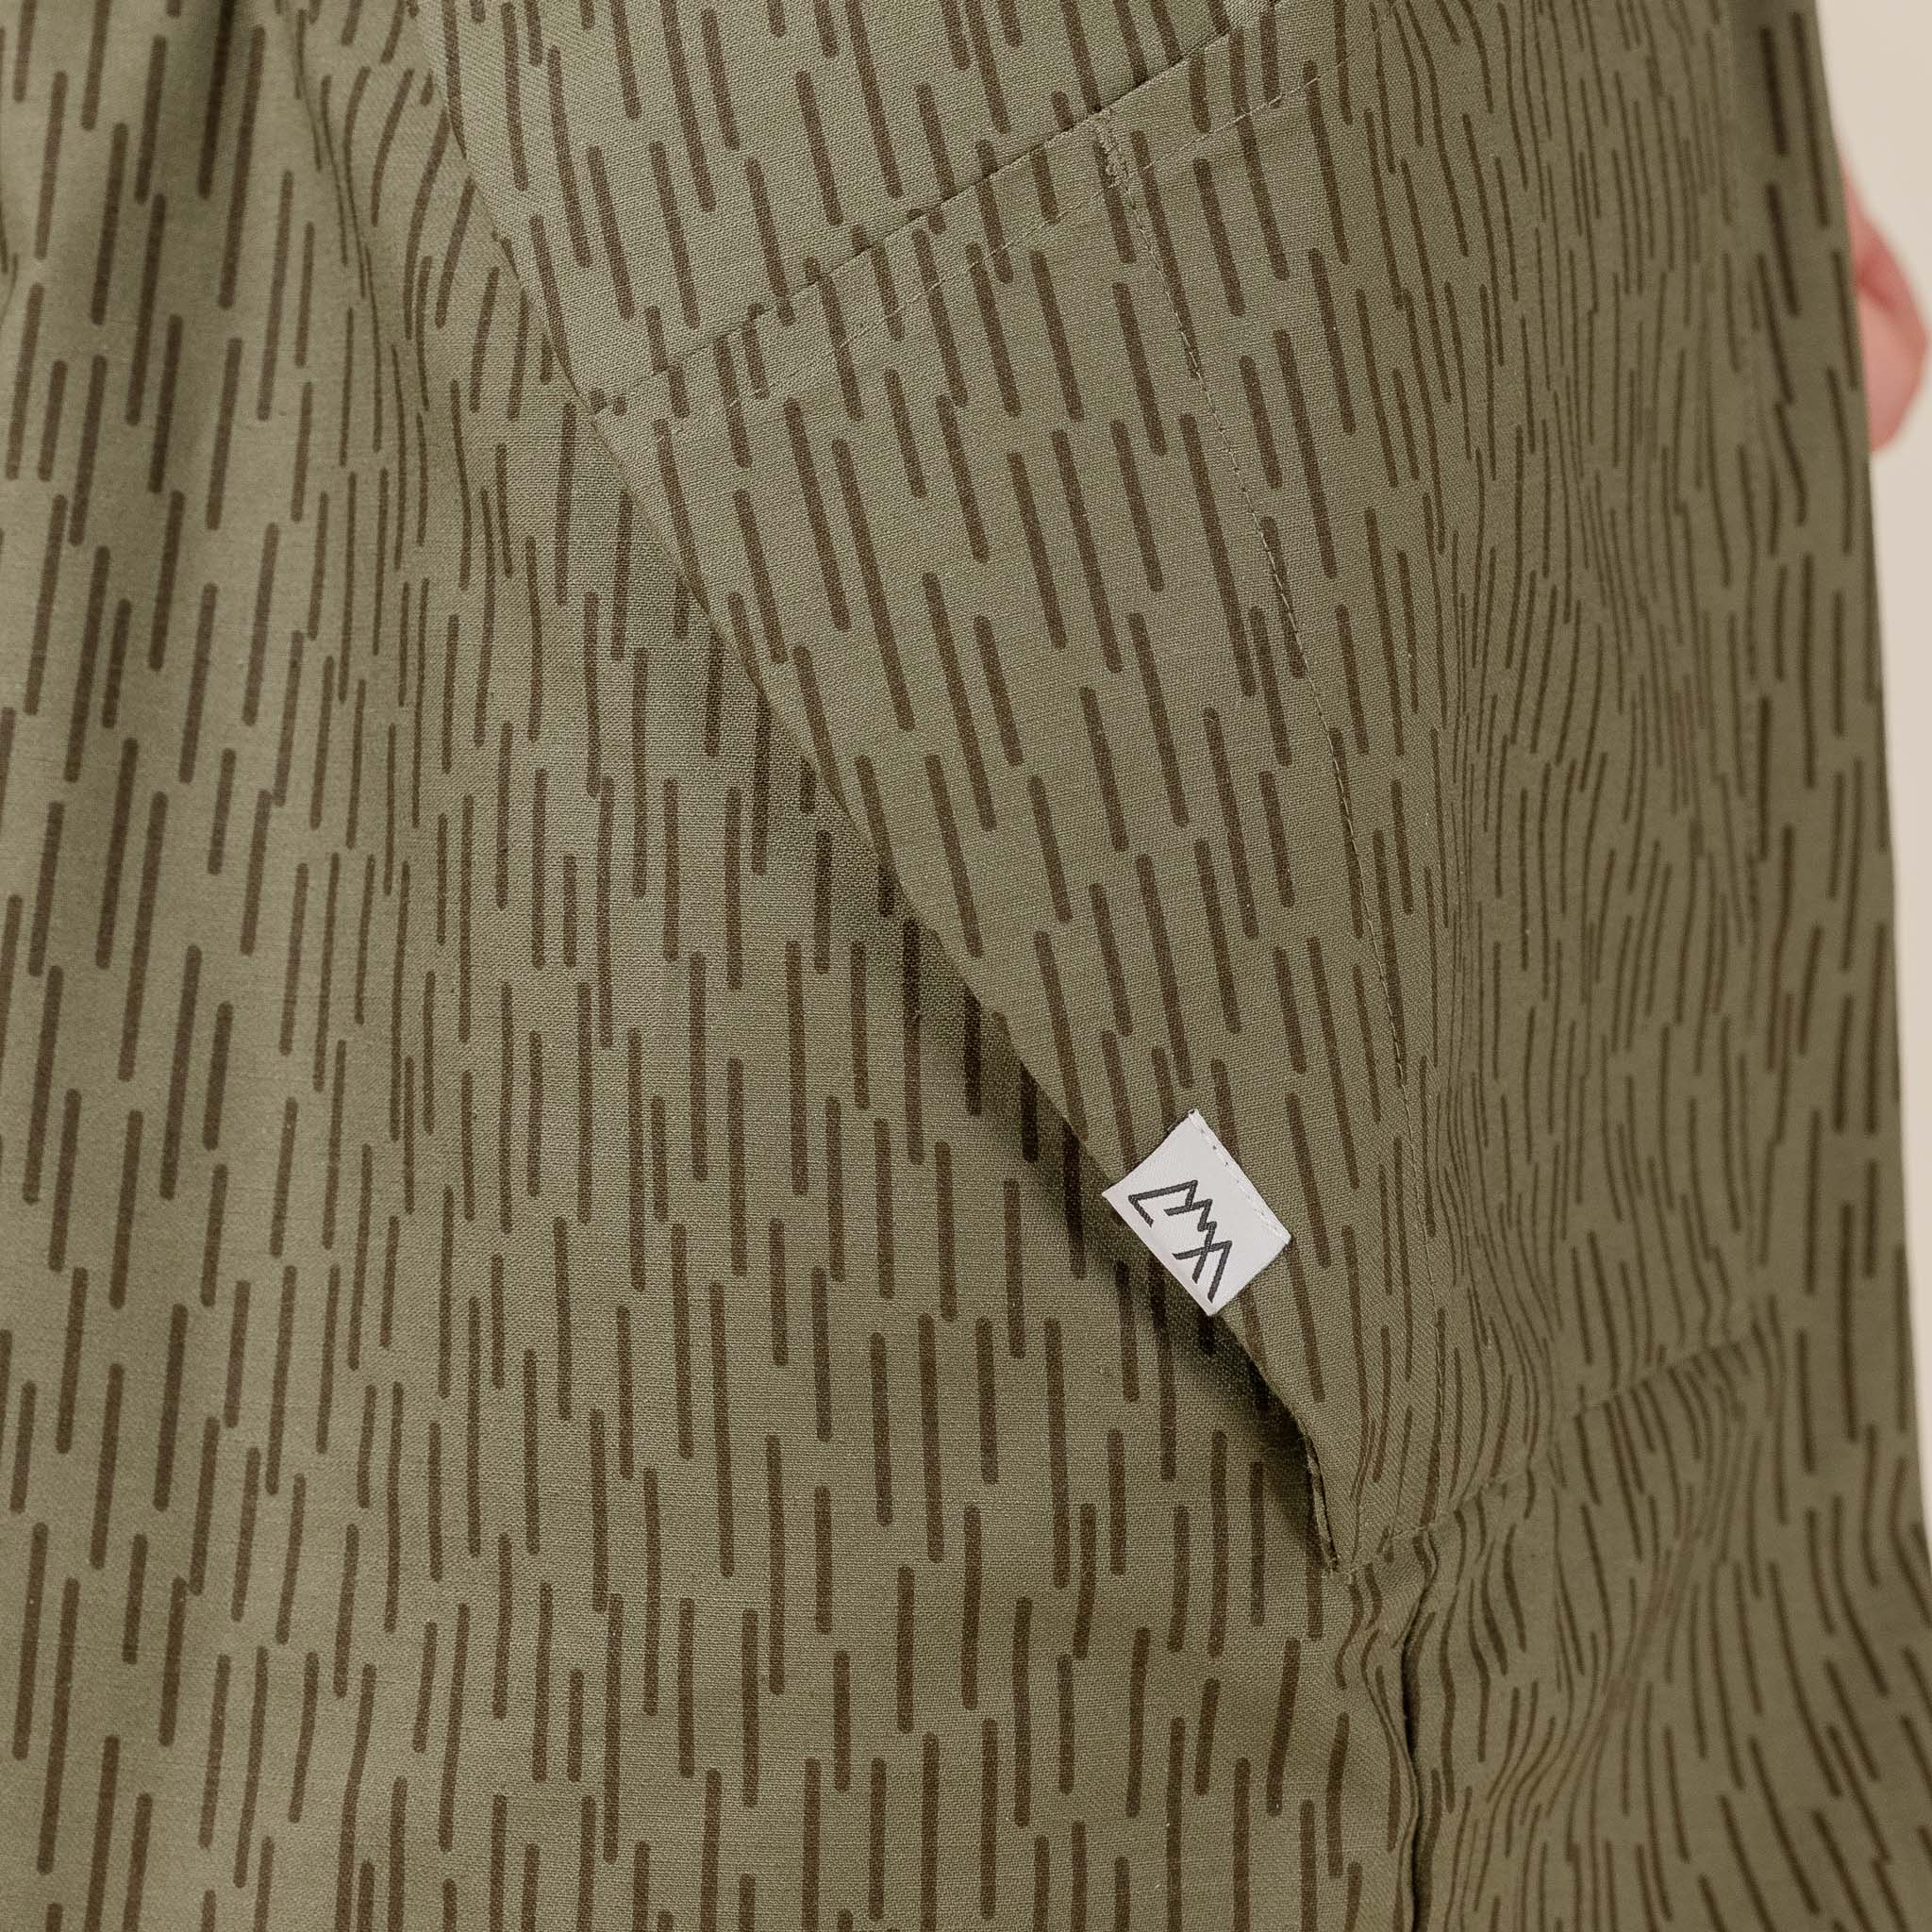 CMF Comfy Outdoor Garment - M65 Shorts Rain Camo - Khaki UK Stockist "lost hills store Japan"